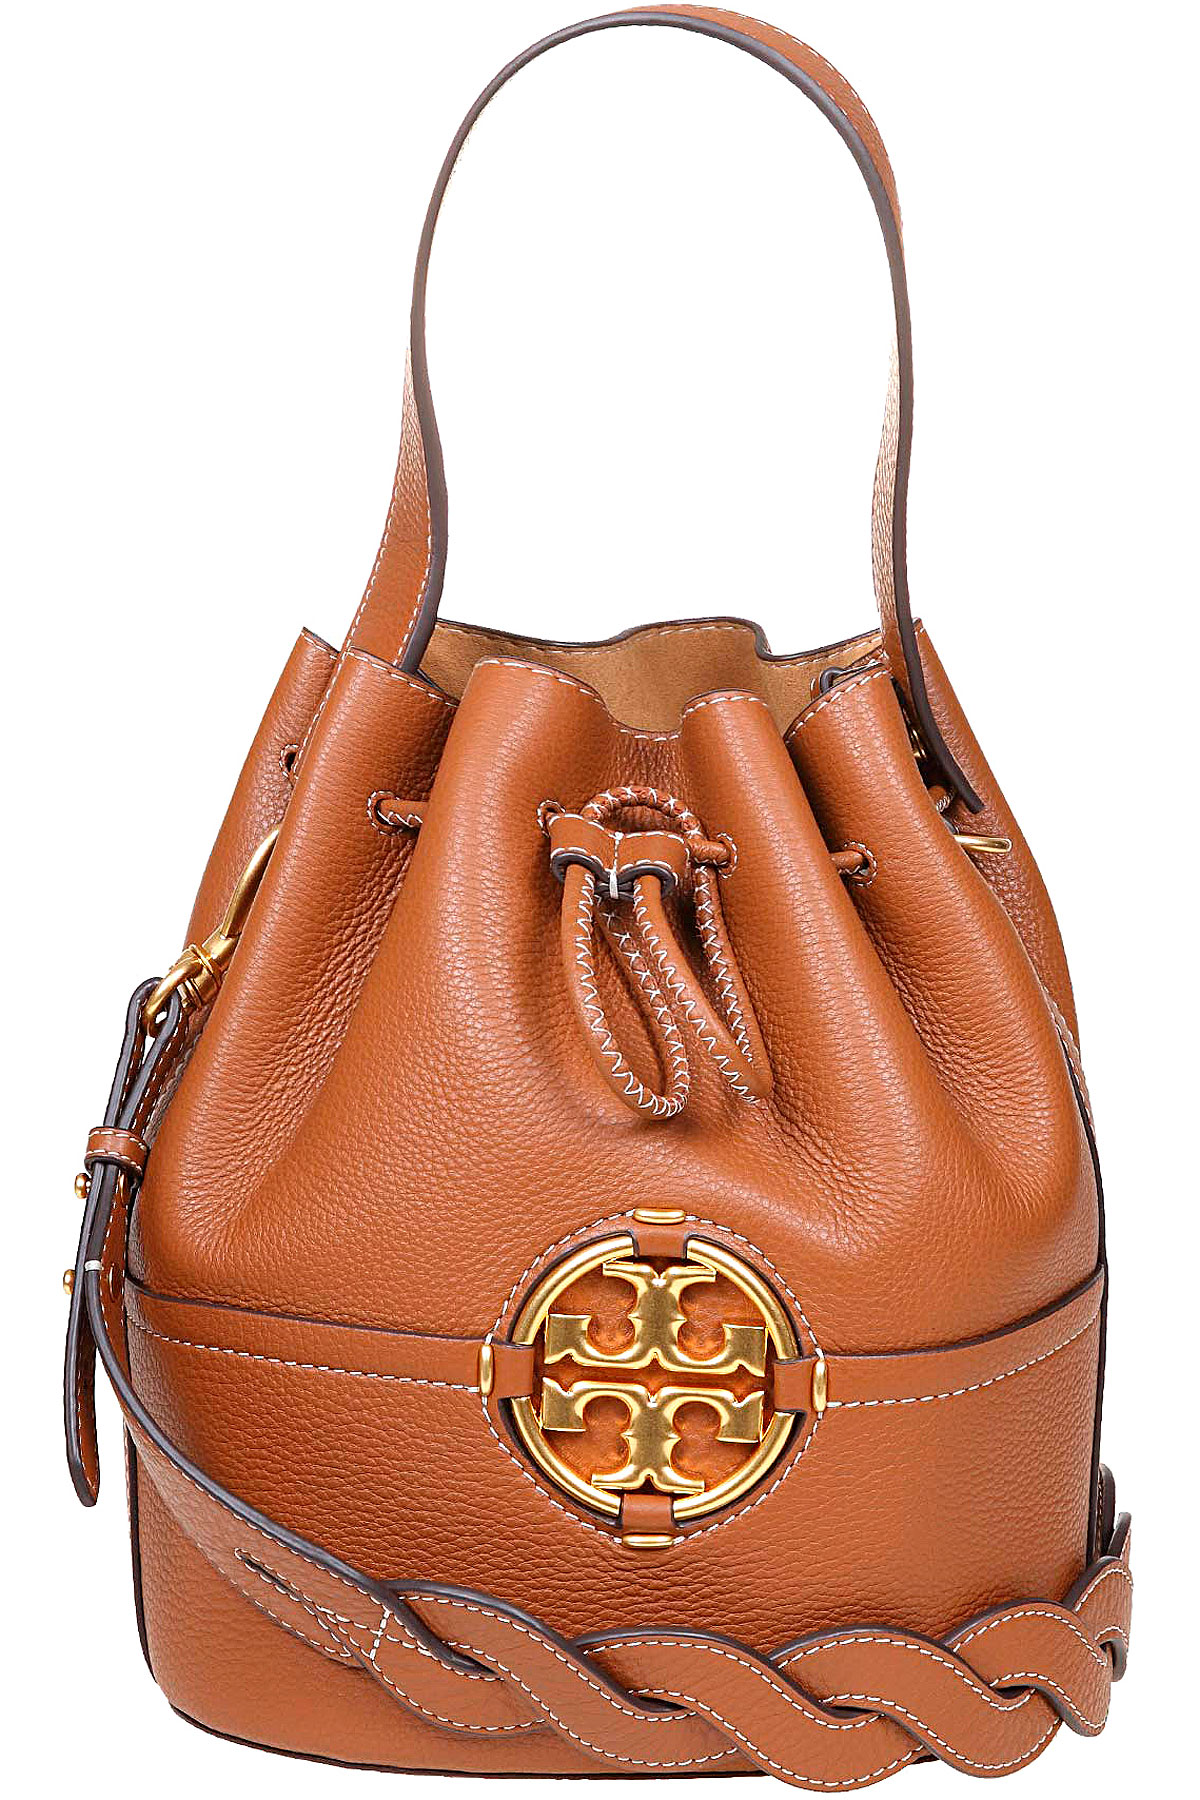 Handbags Tory Burch, Style code: 79323-905-